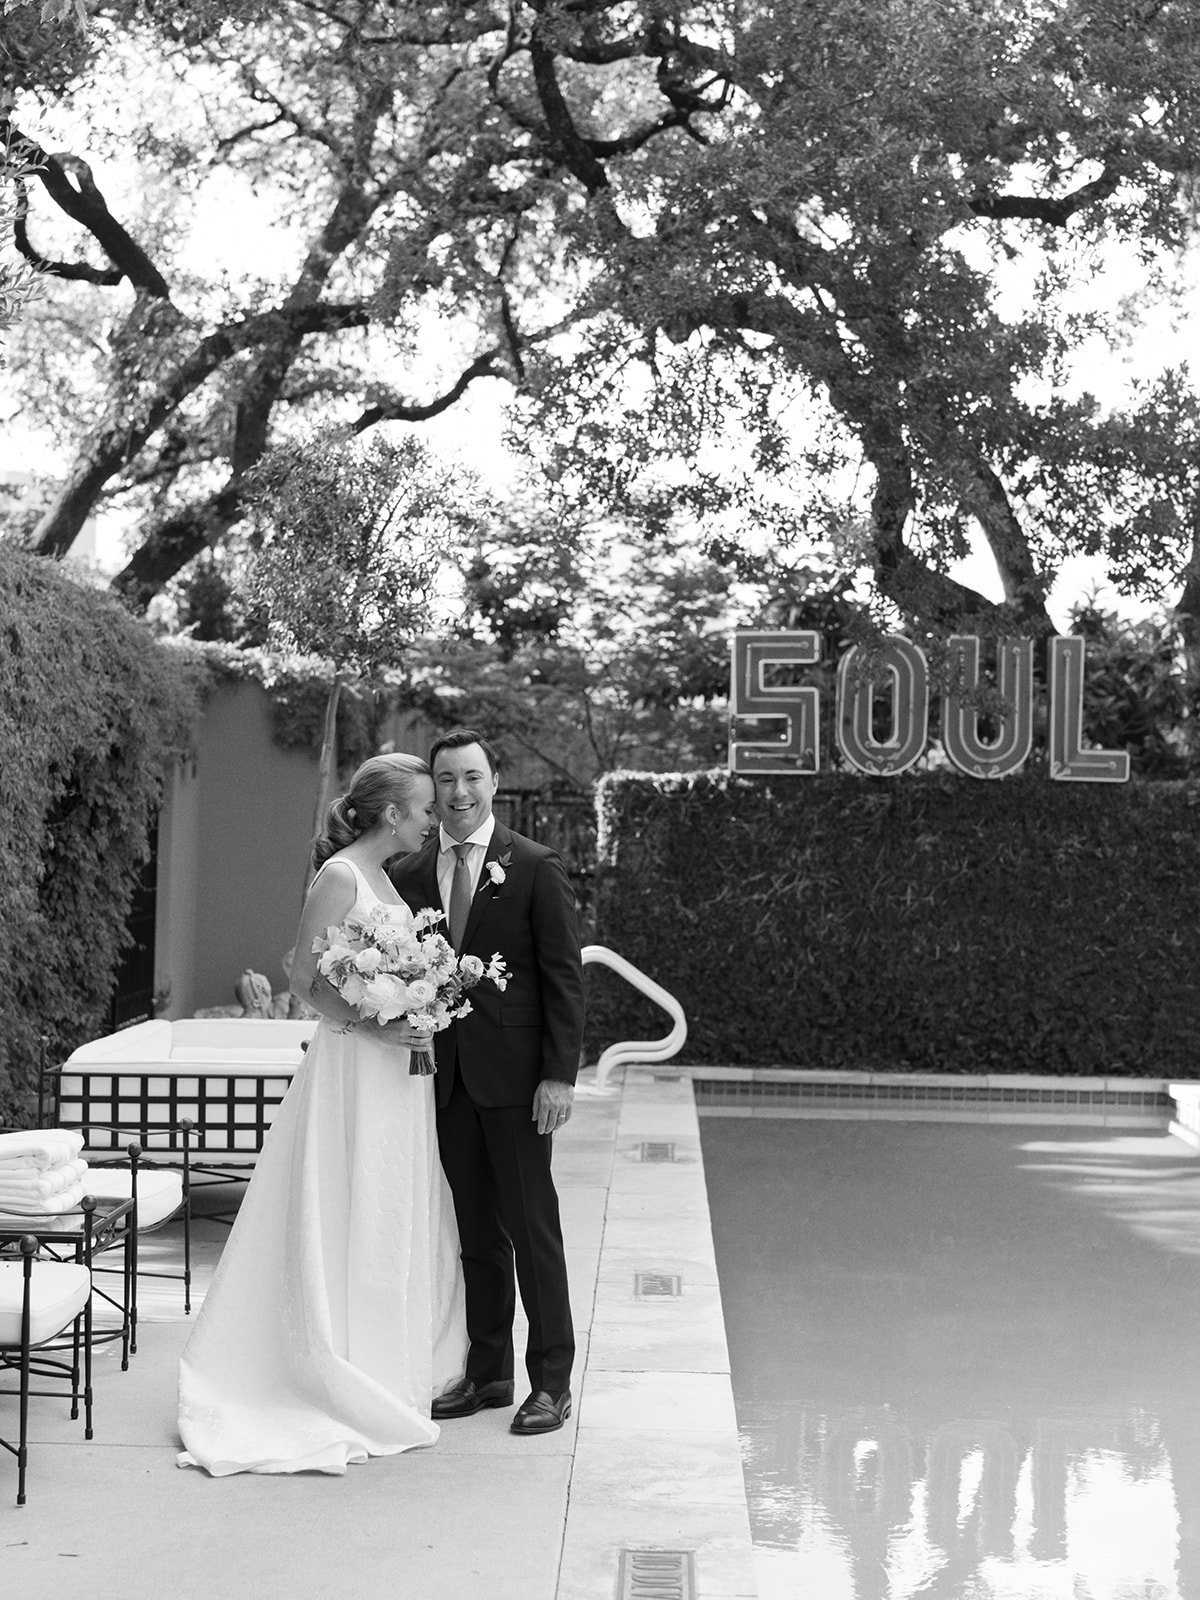 Best-Austin-Wedding-Photographers-Elopement-Film-35mm-Asheville-Santa-Barbara-Hotel-Saint-Cecilia-97.jpg